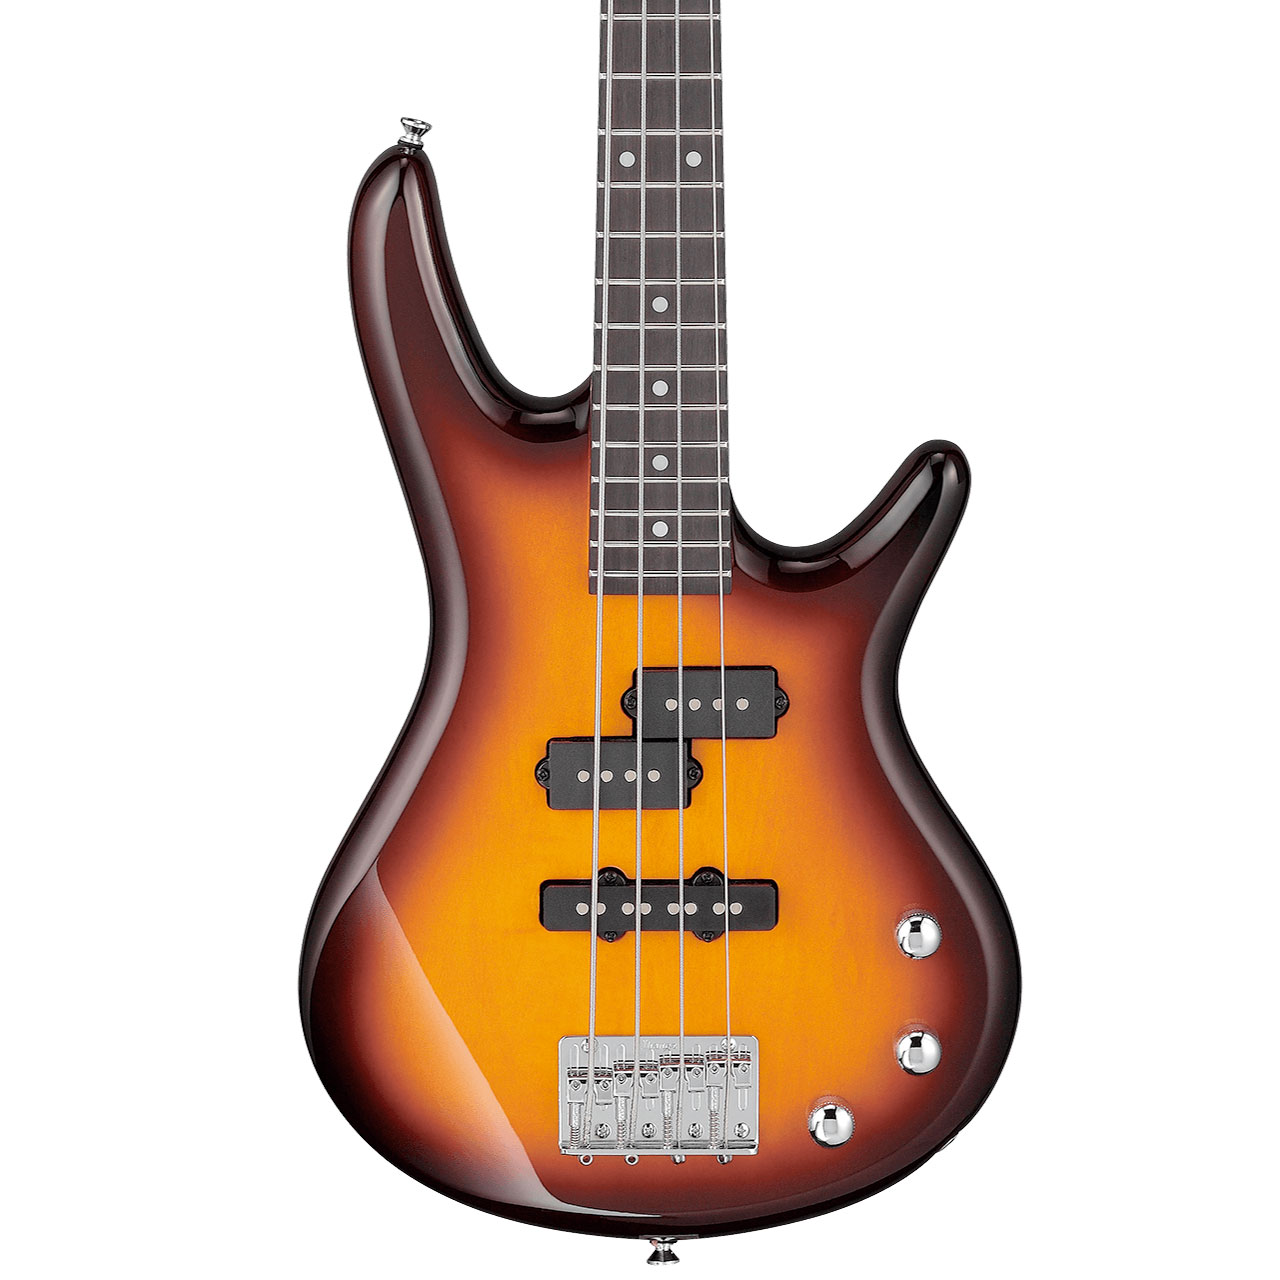  Ibanez miKro GSRM20 Bass Guitar in Brown Sunburst 